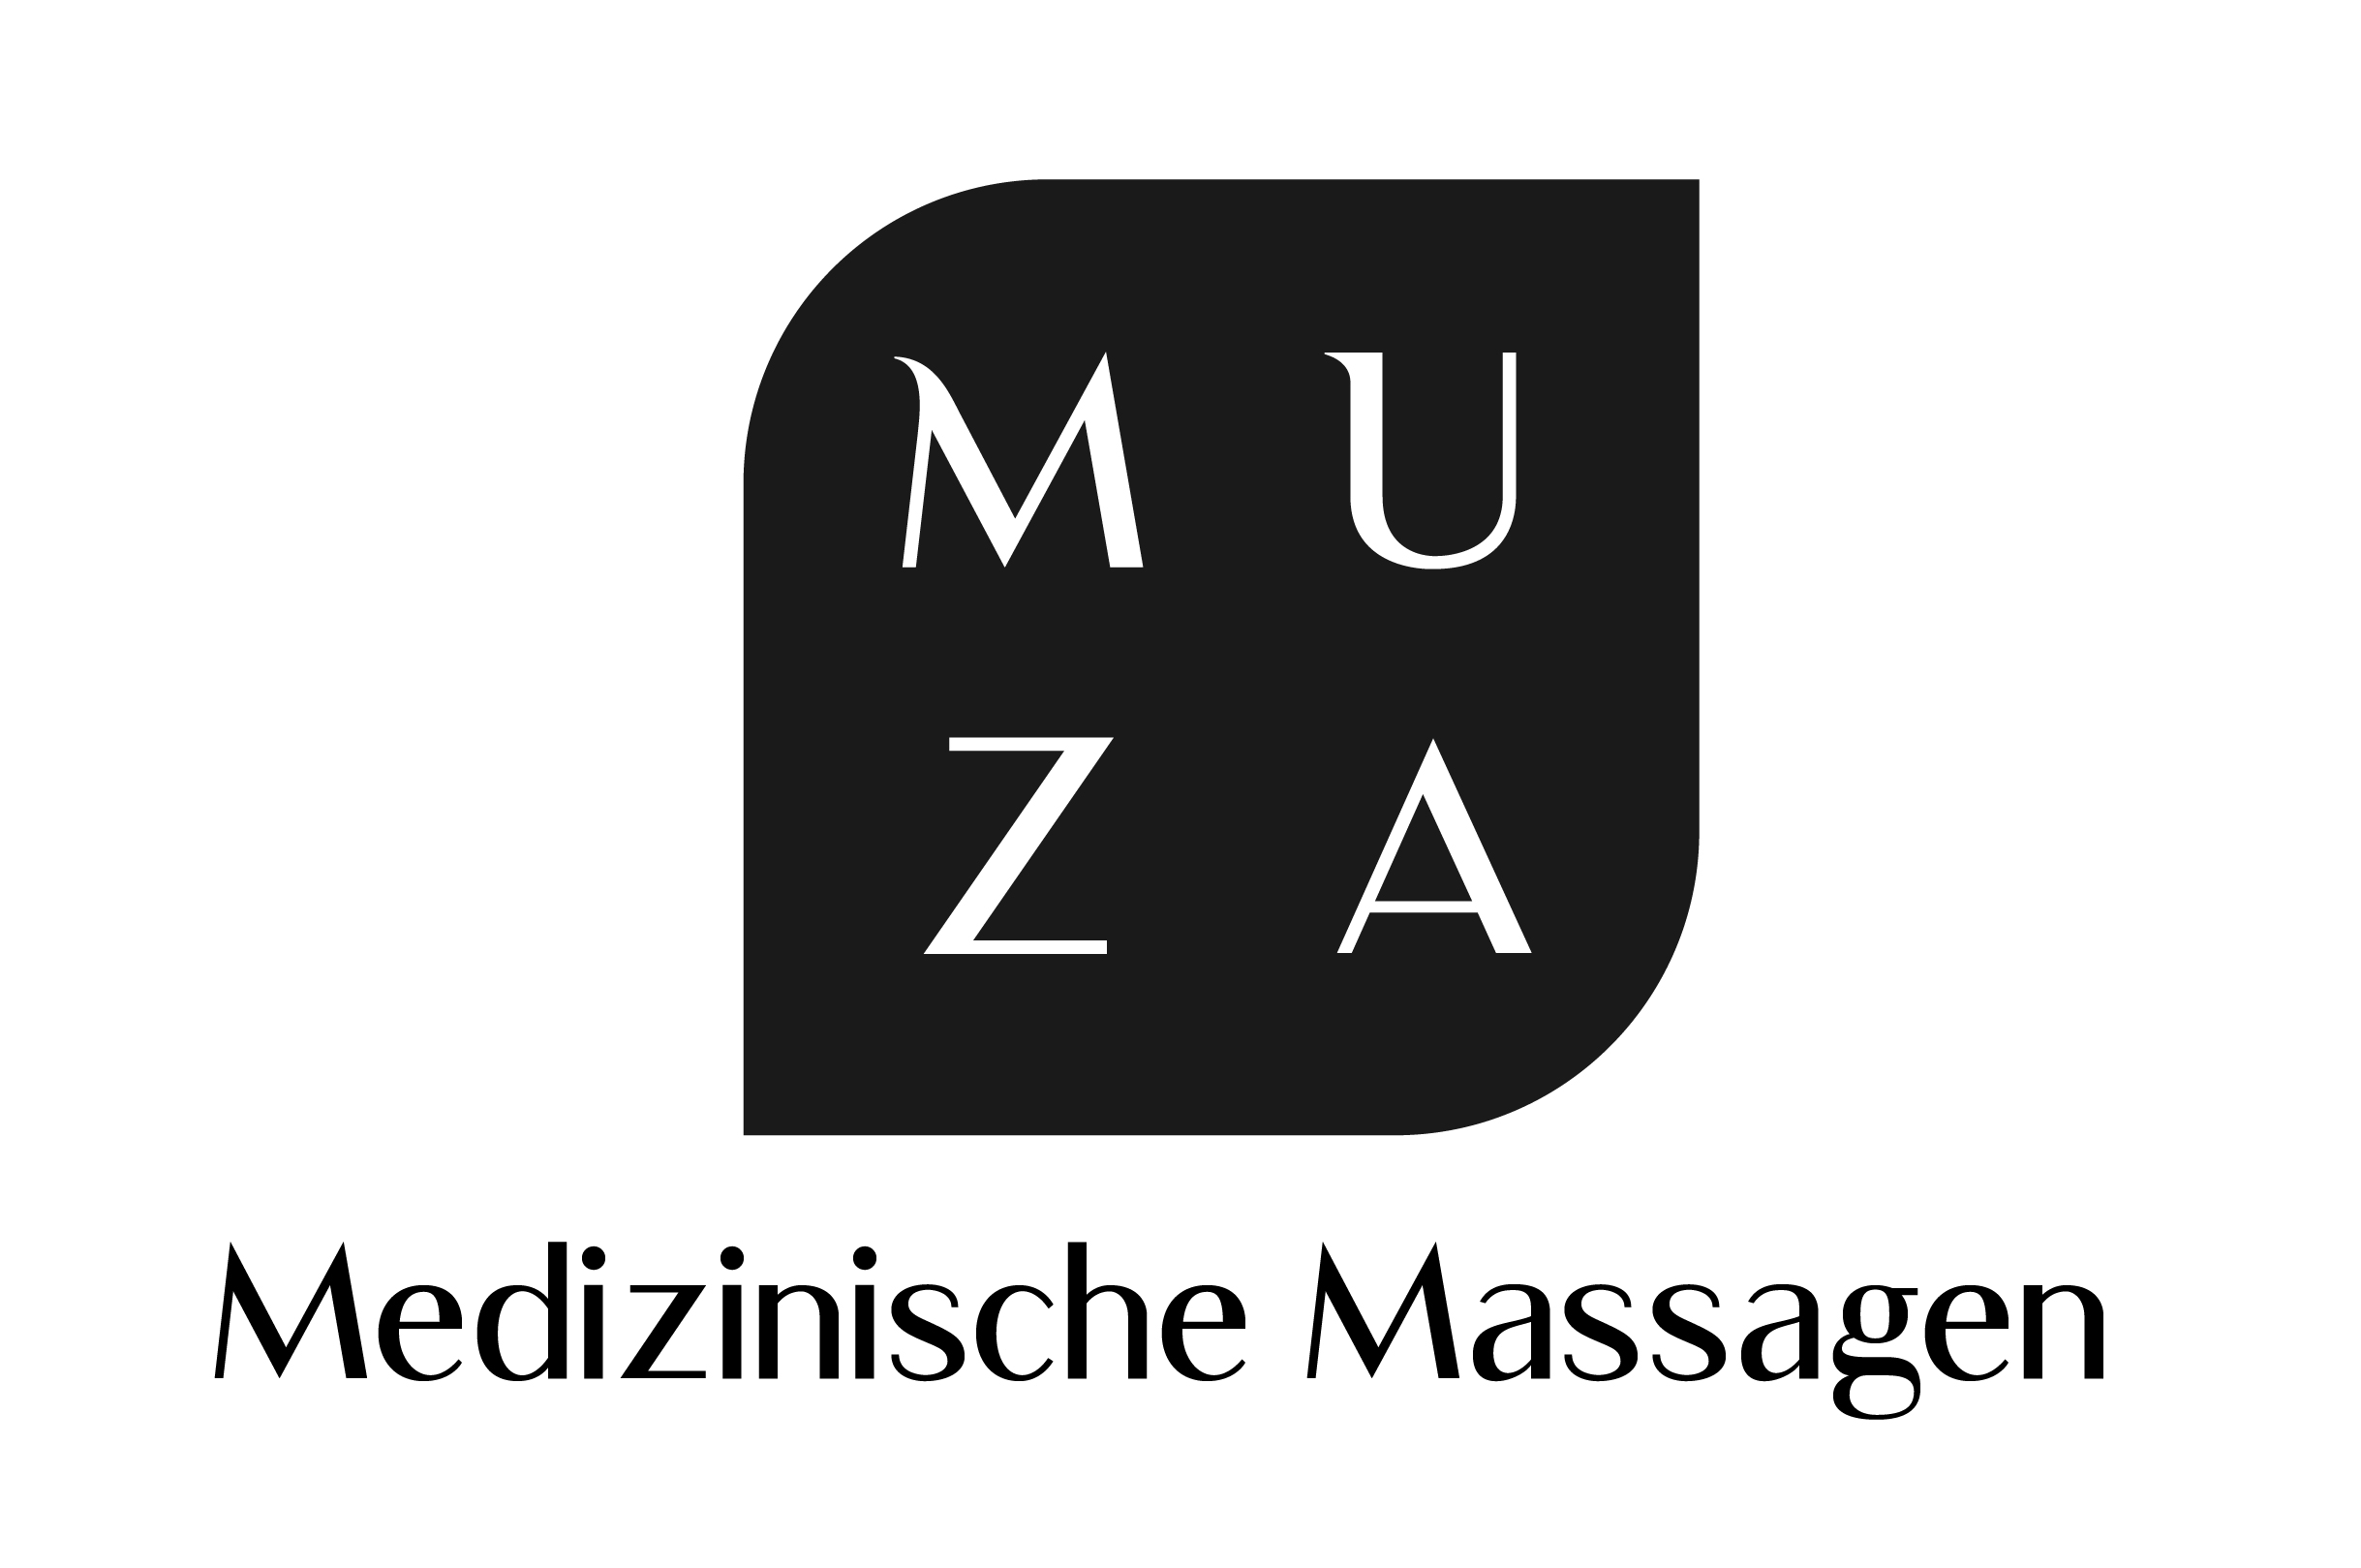 The logo for muza medical massages.